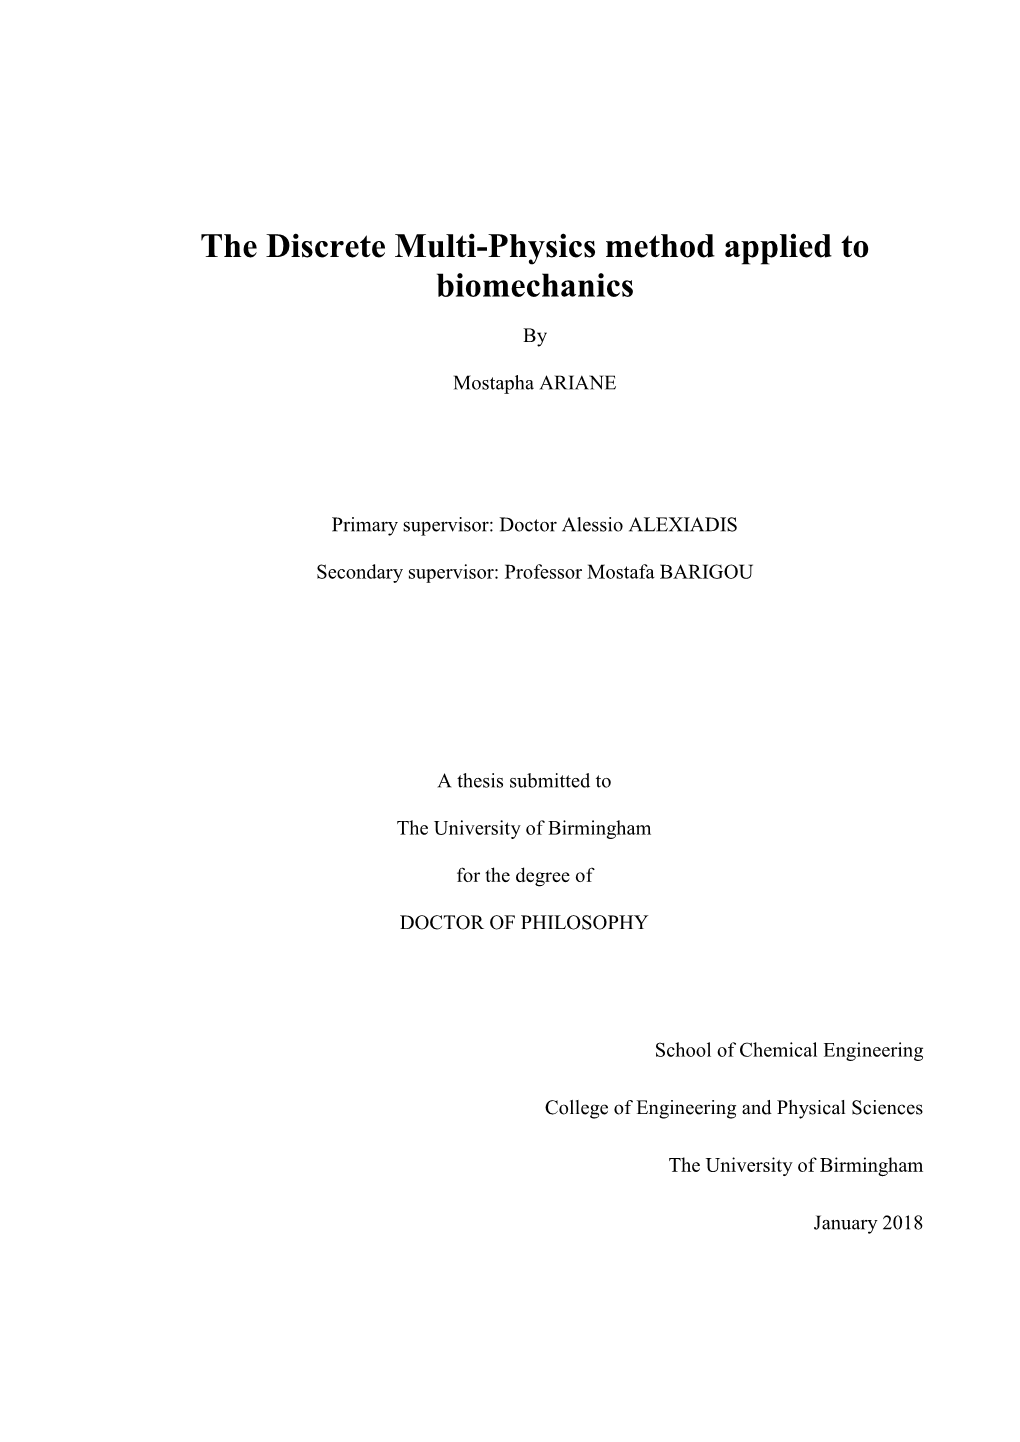 The Discrete Multi-Physics Method Applied to Biomechanics